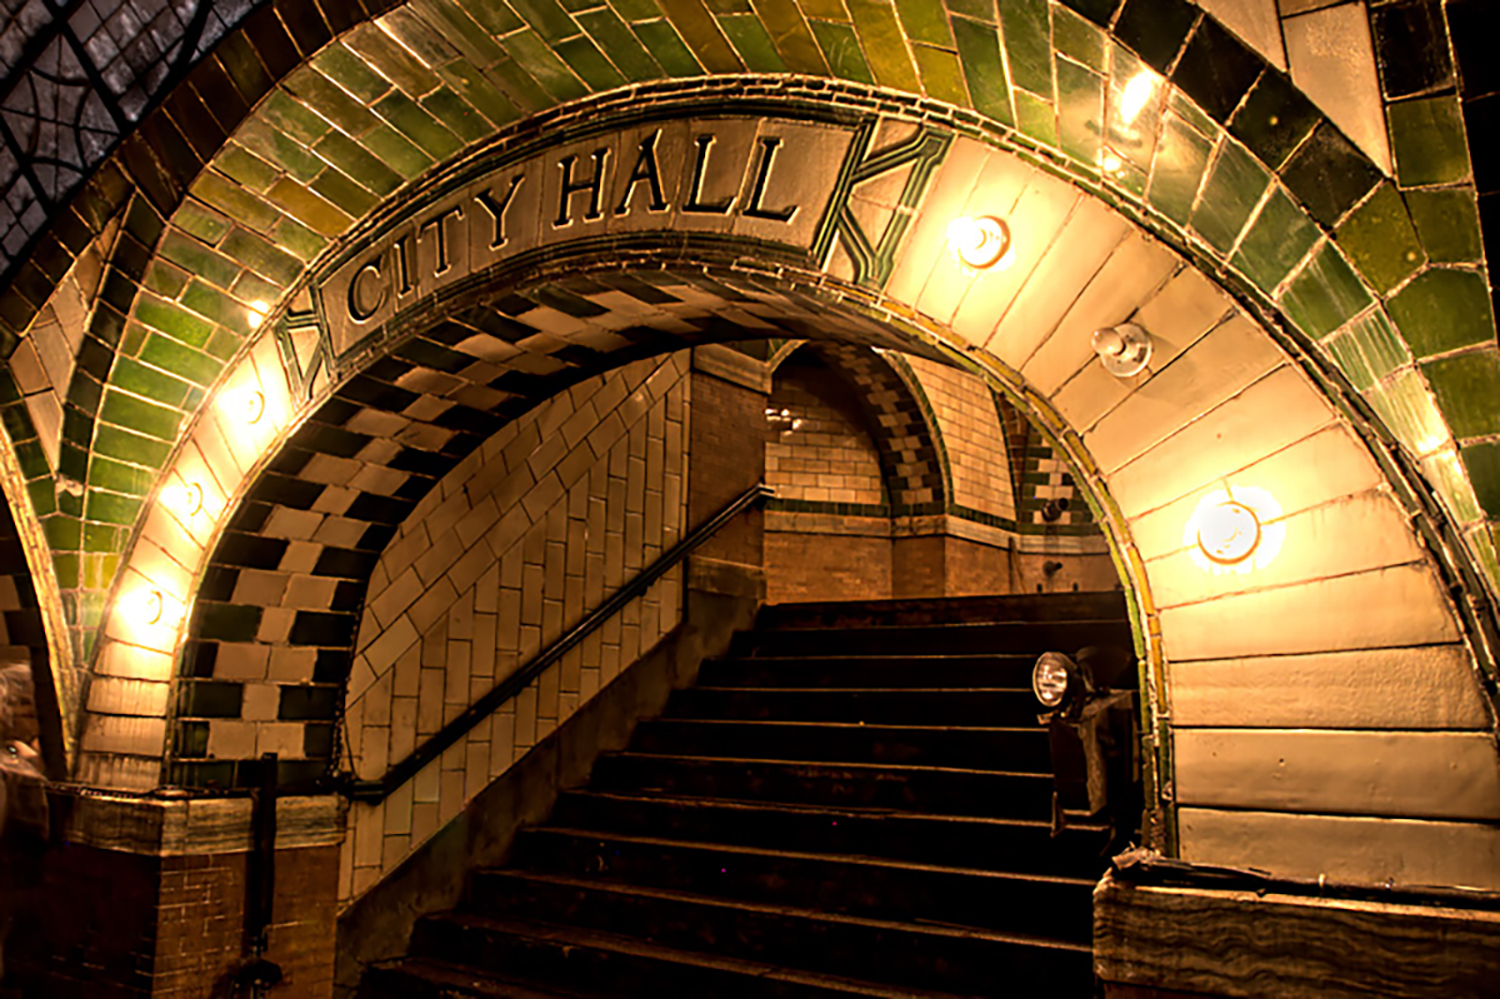 City Hall Subway New York